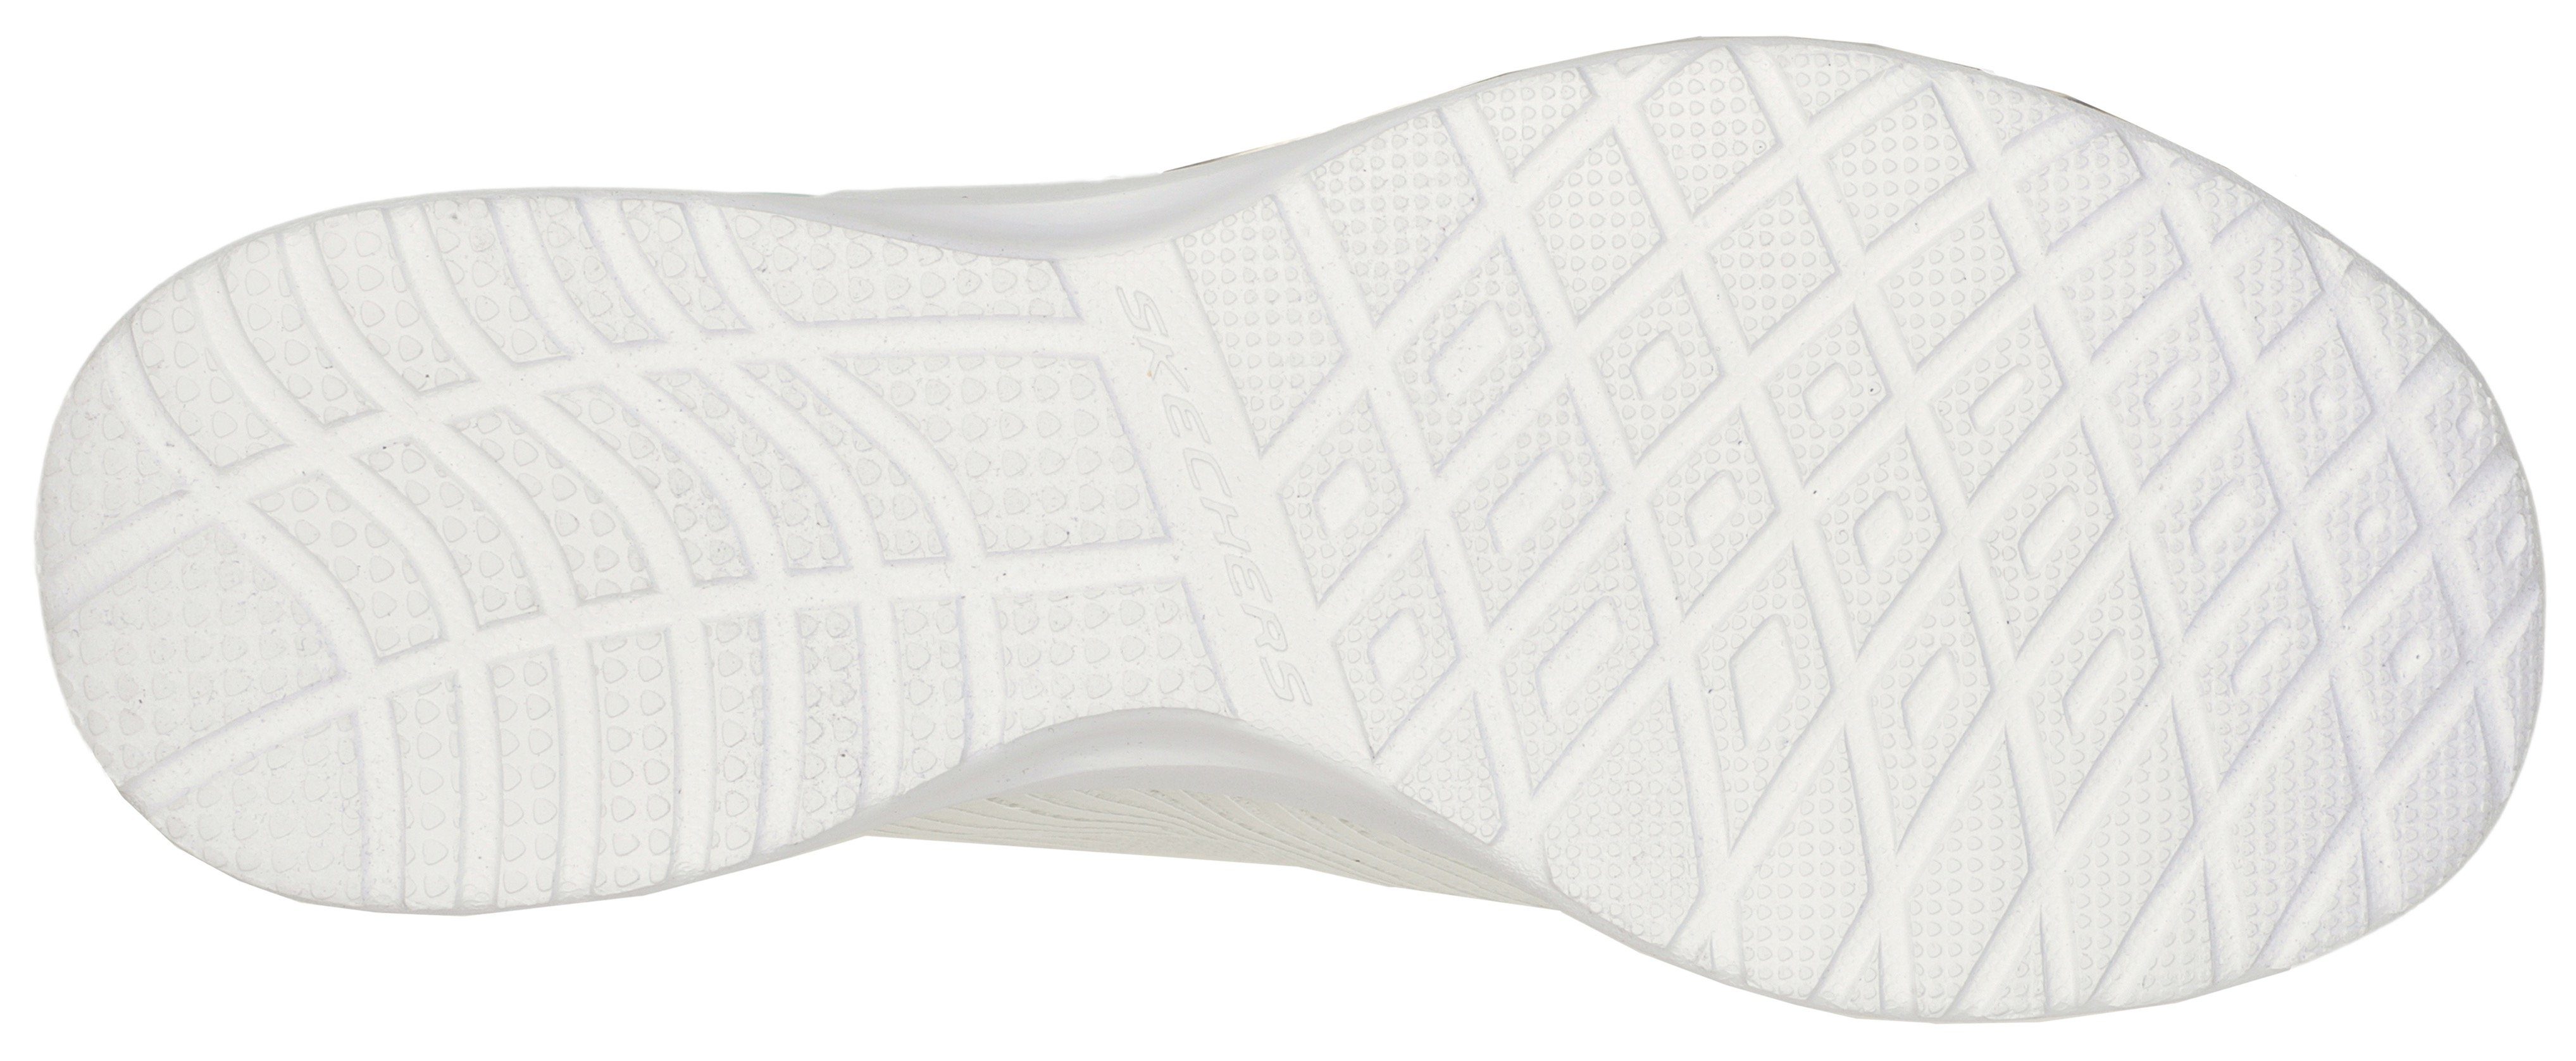 SKECH-AIR Foam Memory Ausstattung weiß-mint mit Sneaker LUMINOSITY DYNAMIGHT Skechers